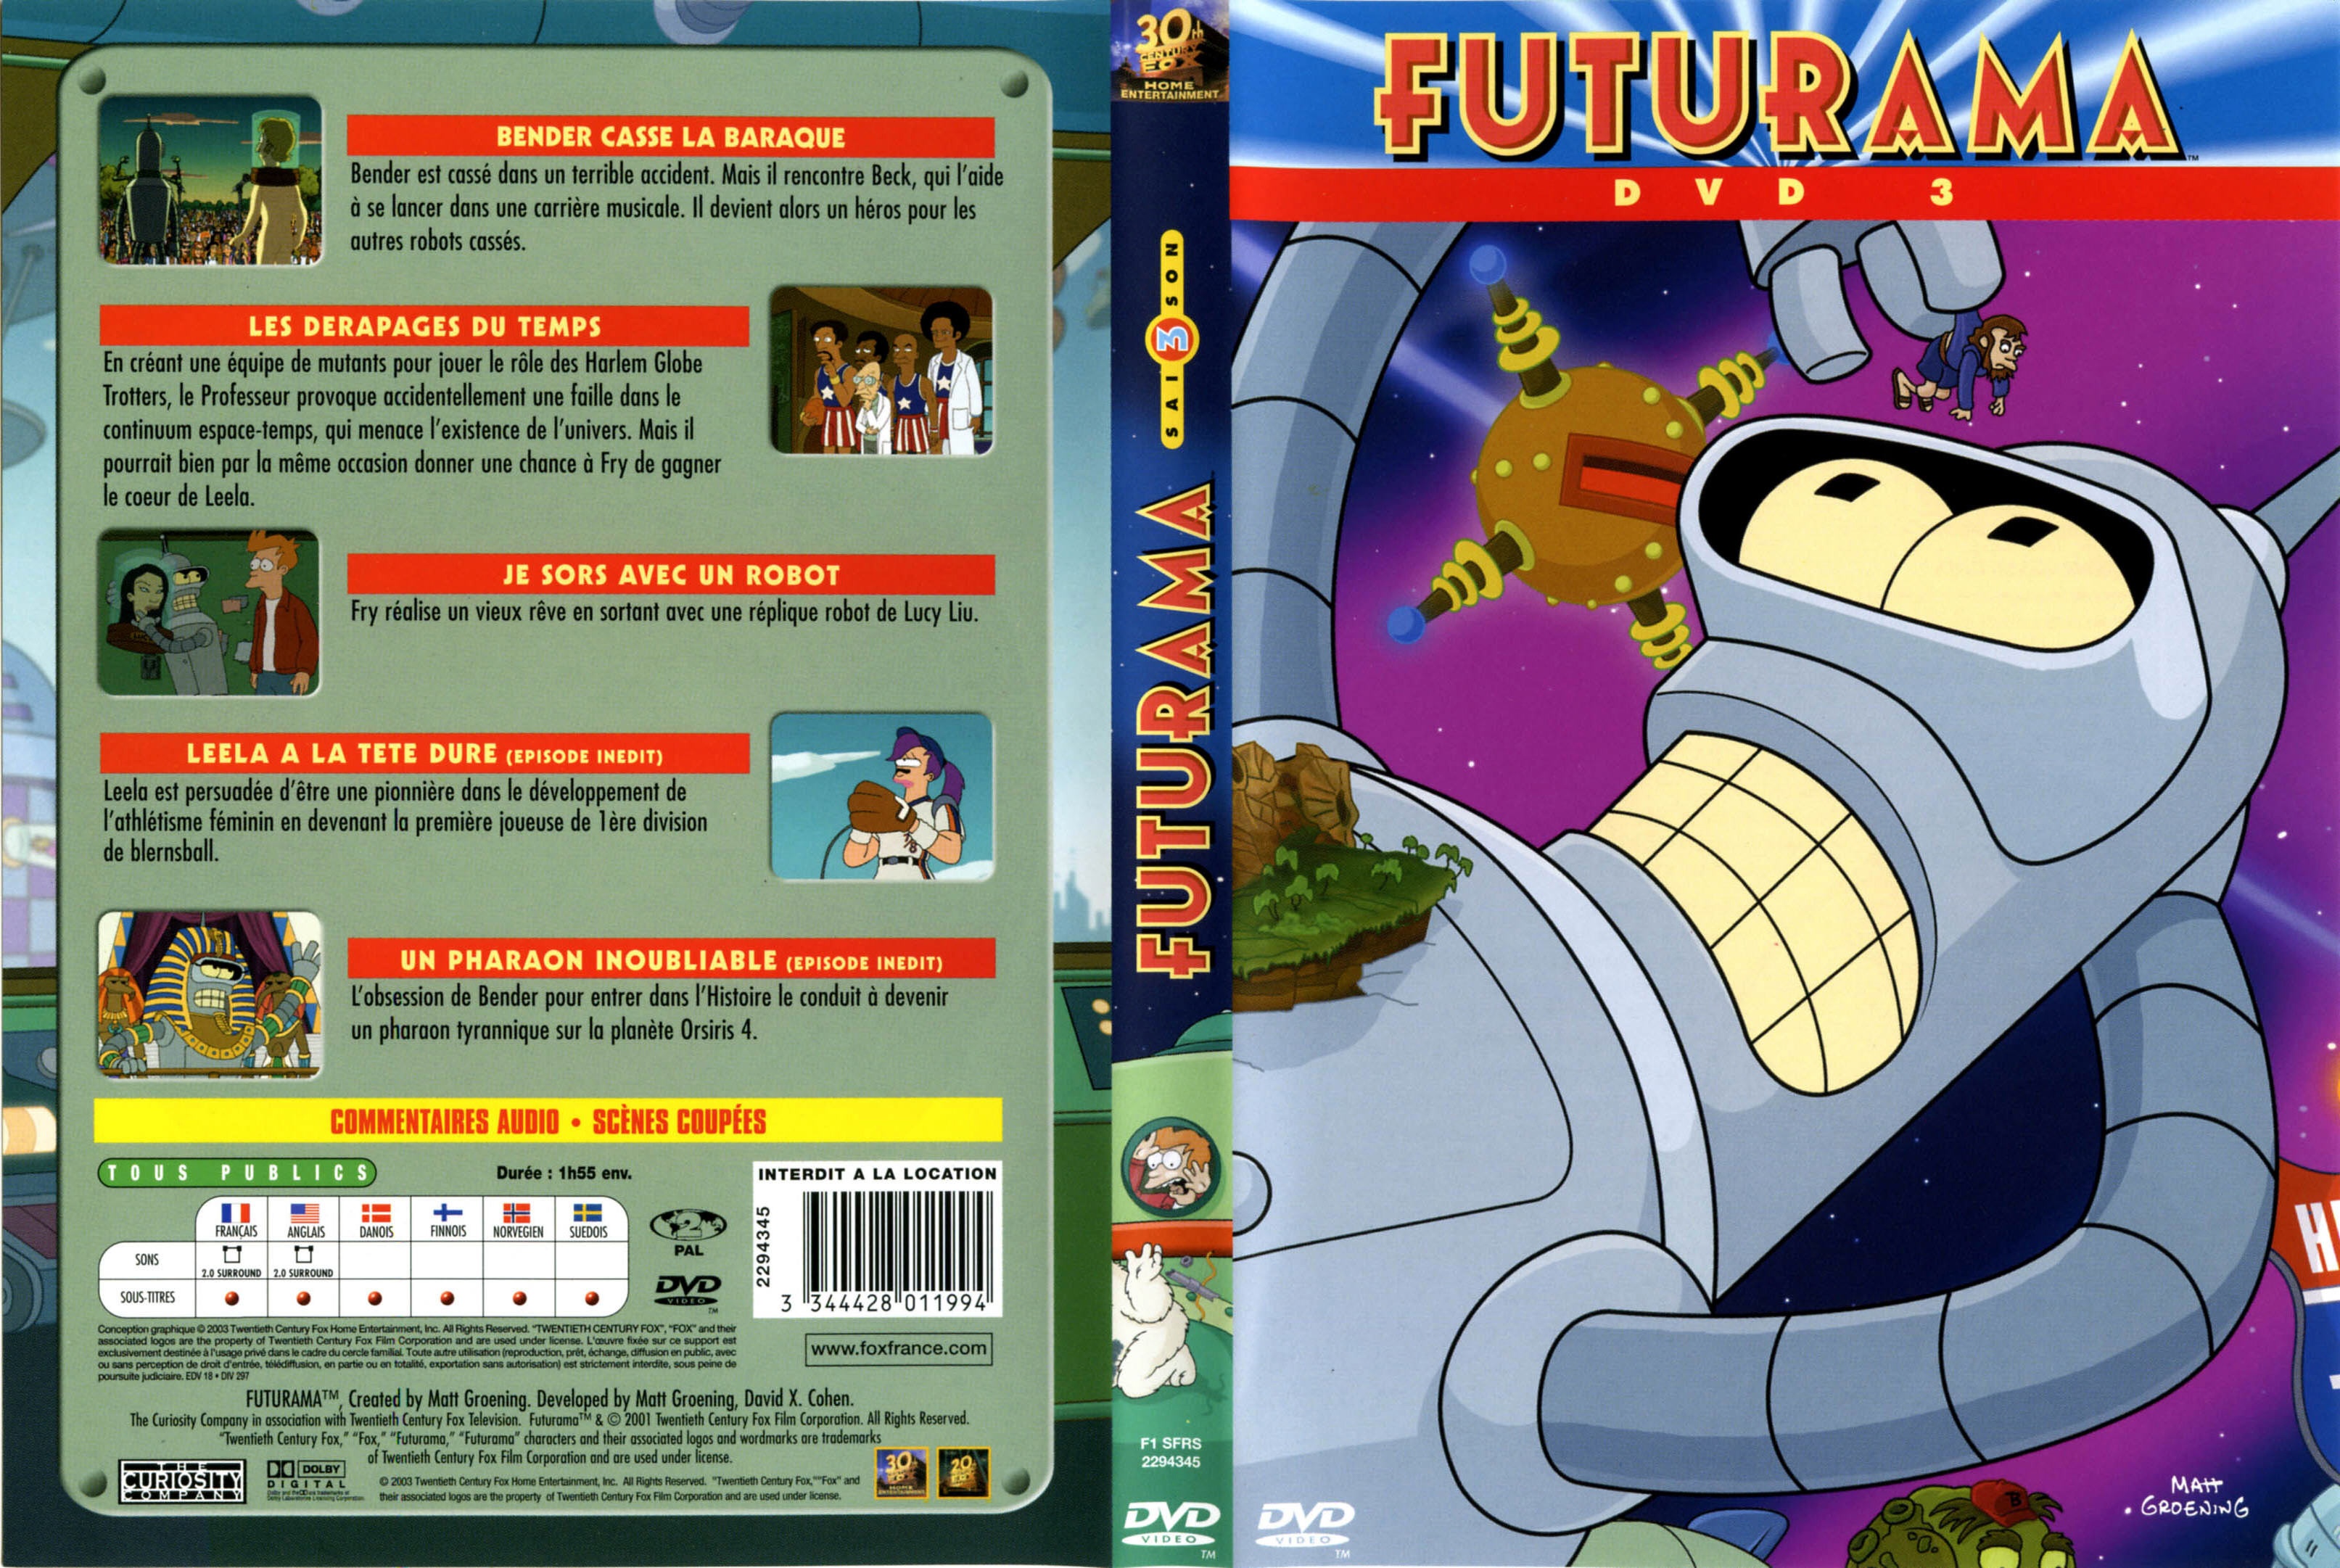 Jaquette DVD Futurama saison 3 DVD 3